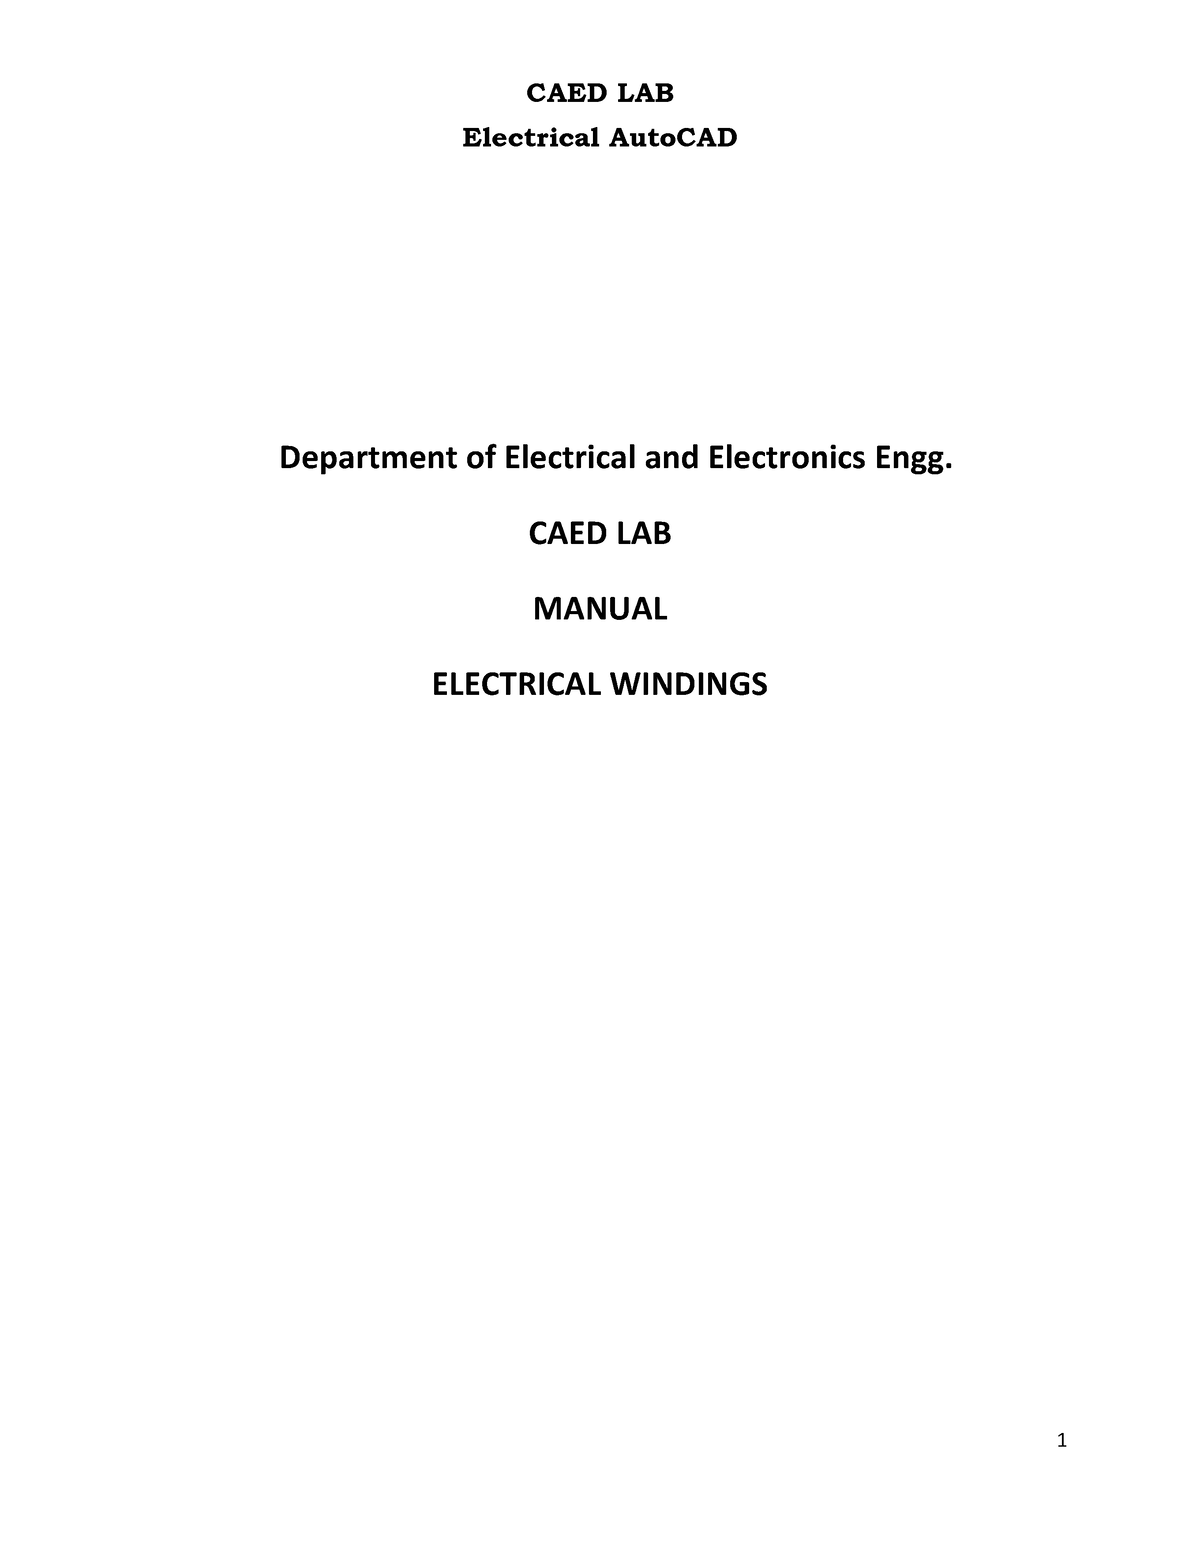 EMDmod 2 | PDF | Electric Motor | Inductor